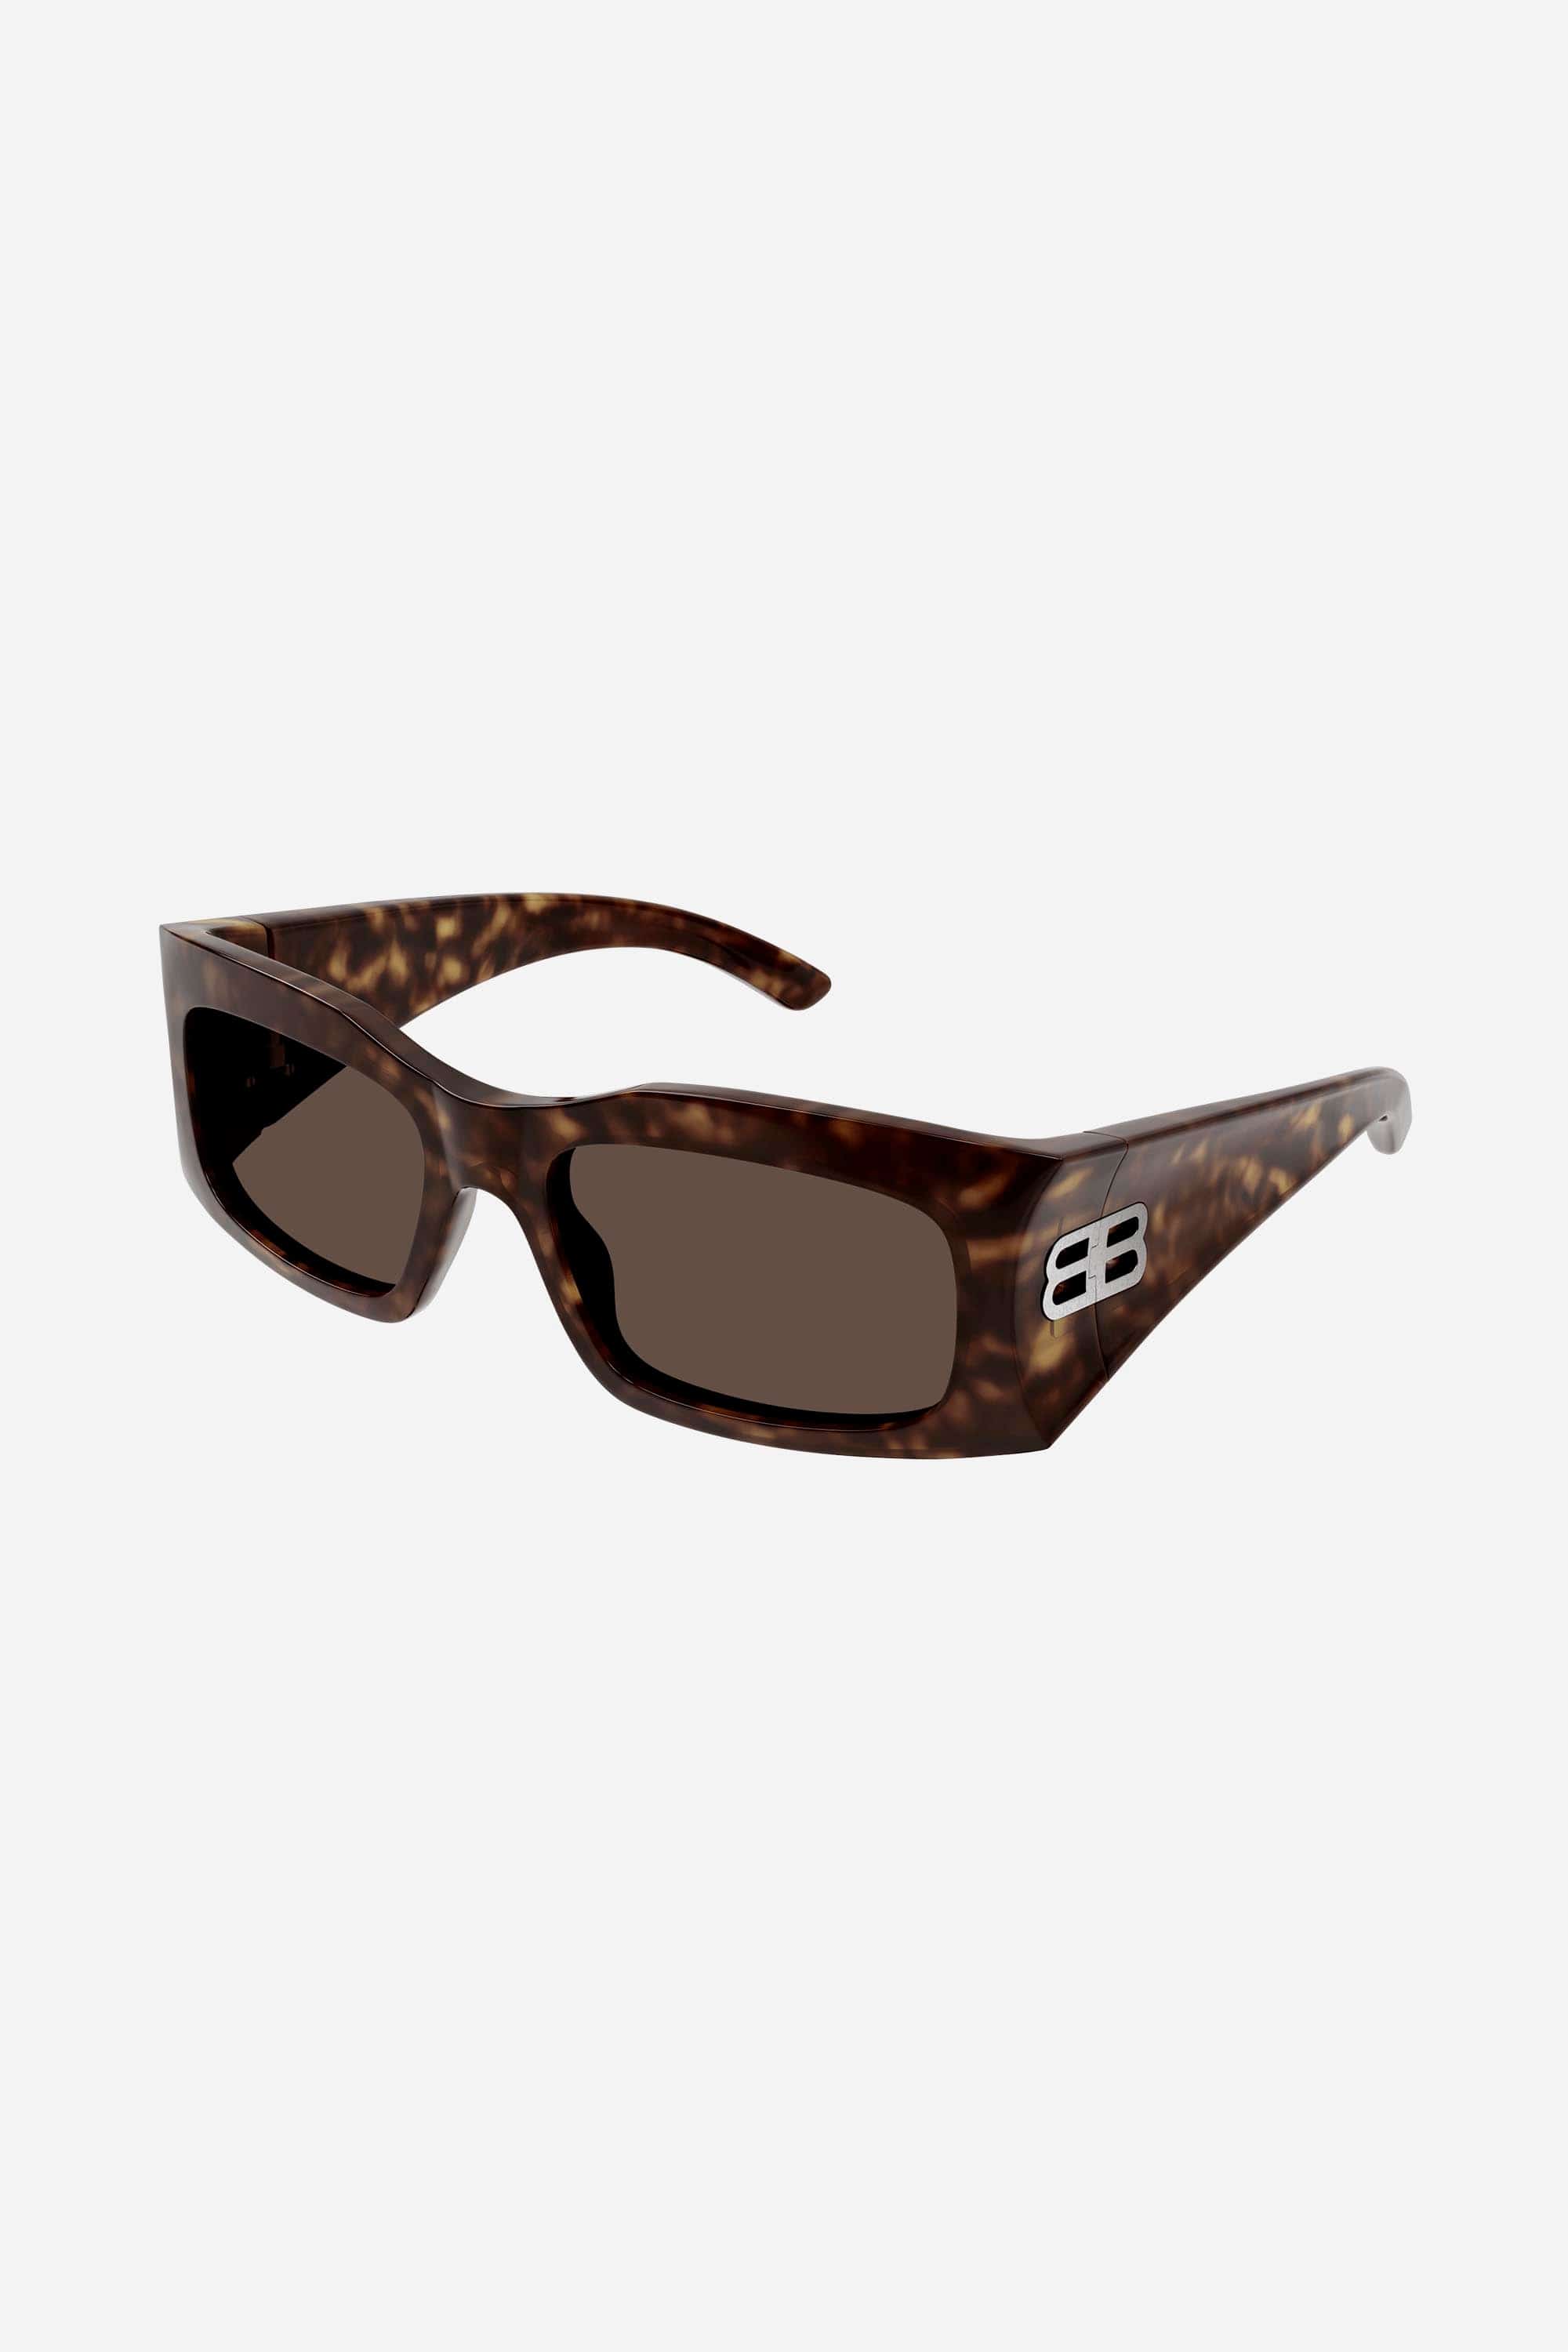 Balenciaga hourglass sunglasses in havana - Eyewear Club